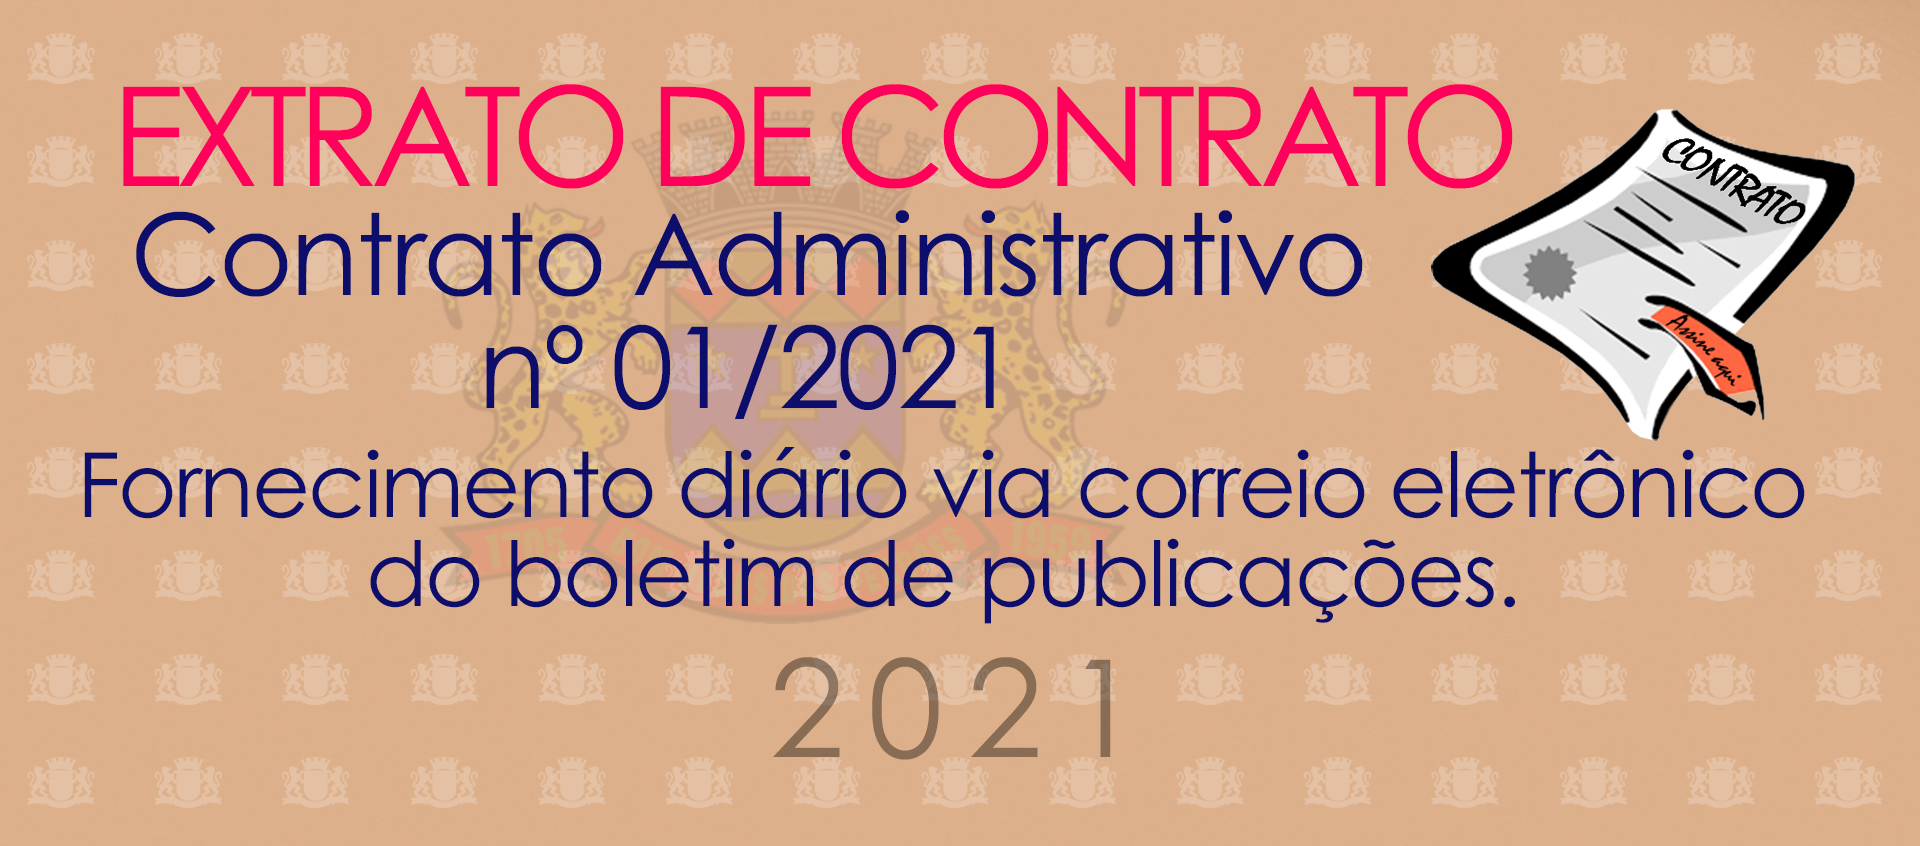 Extrato de Contrato Administrativo nº 01 de 2021